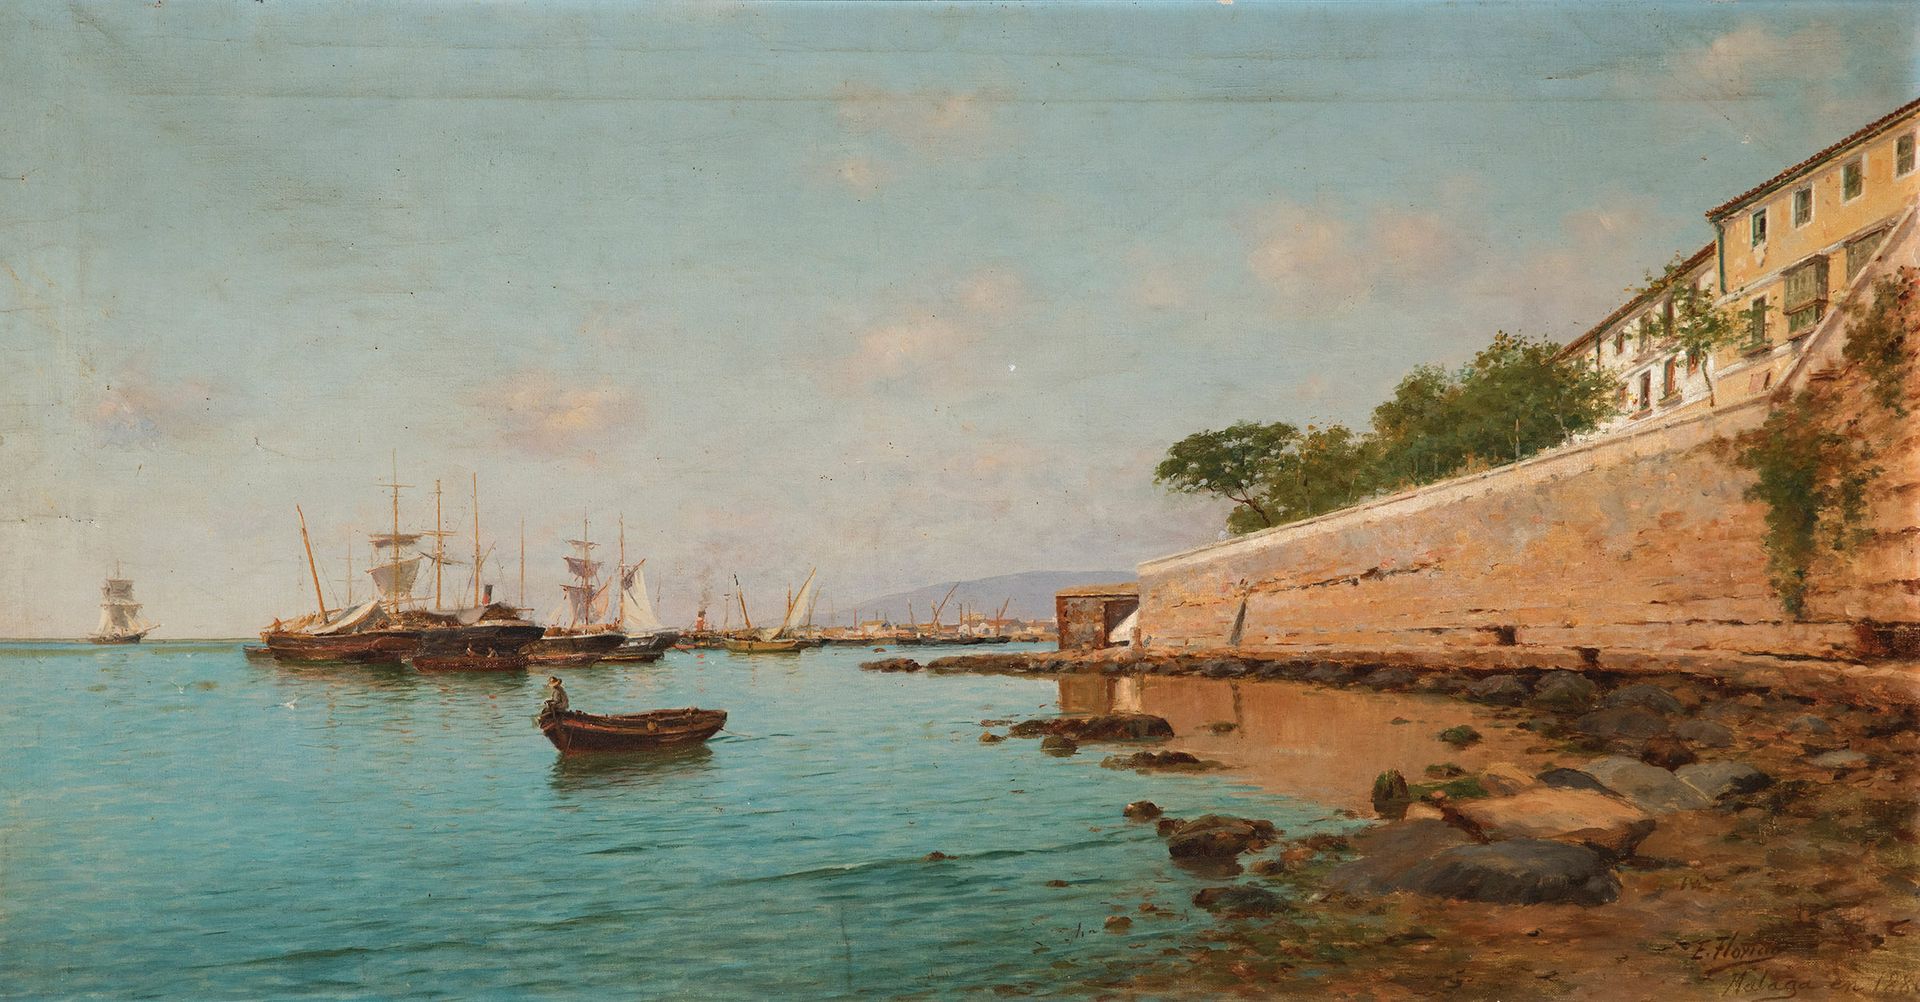 Null ENRIQUE FLORIDO BERNILS（马拉加，1873 - 1929）。
"马拉加的港口"，1880年。
布面油画。
在右下角有签名和日期。&hellip;